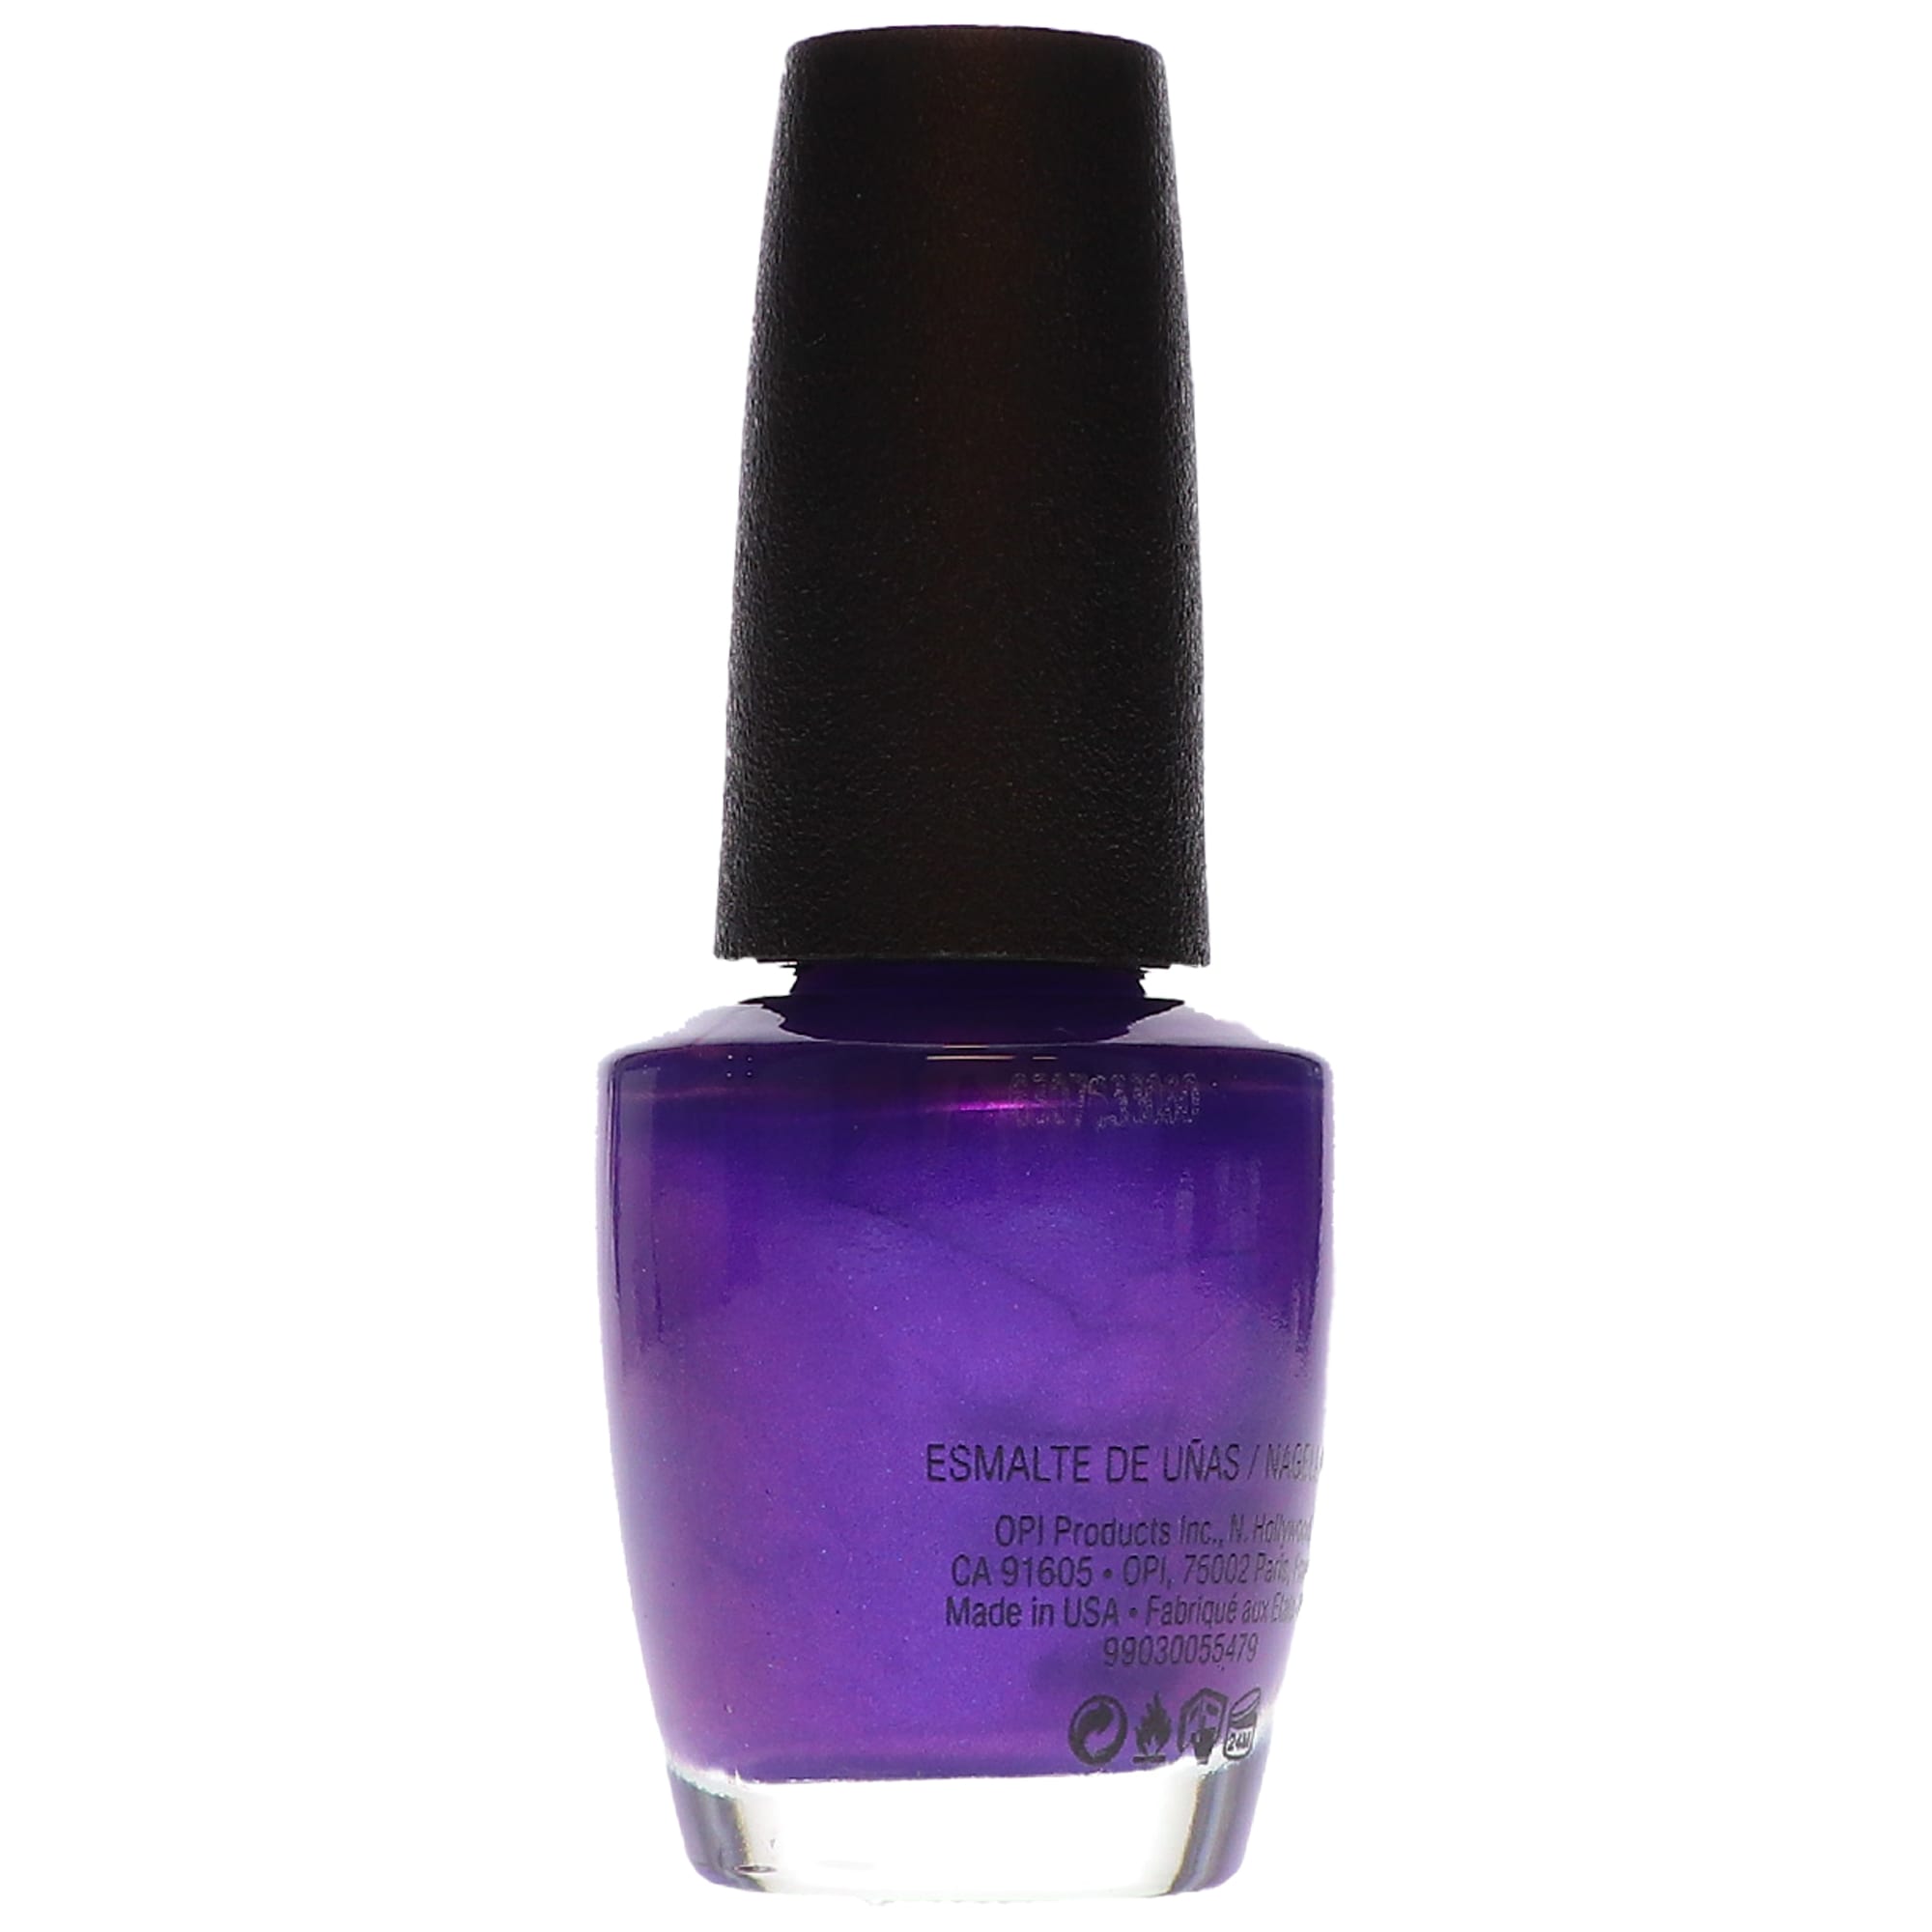 OPI Purple With A Purpose NLB30, 0.5 oz. - LaLa Daisy